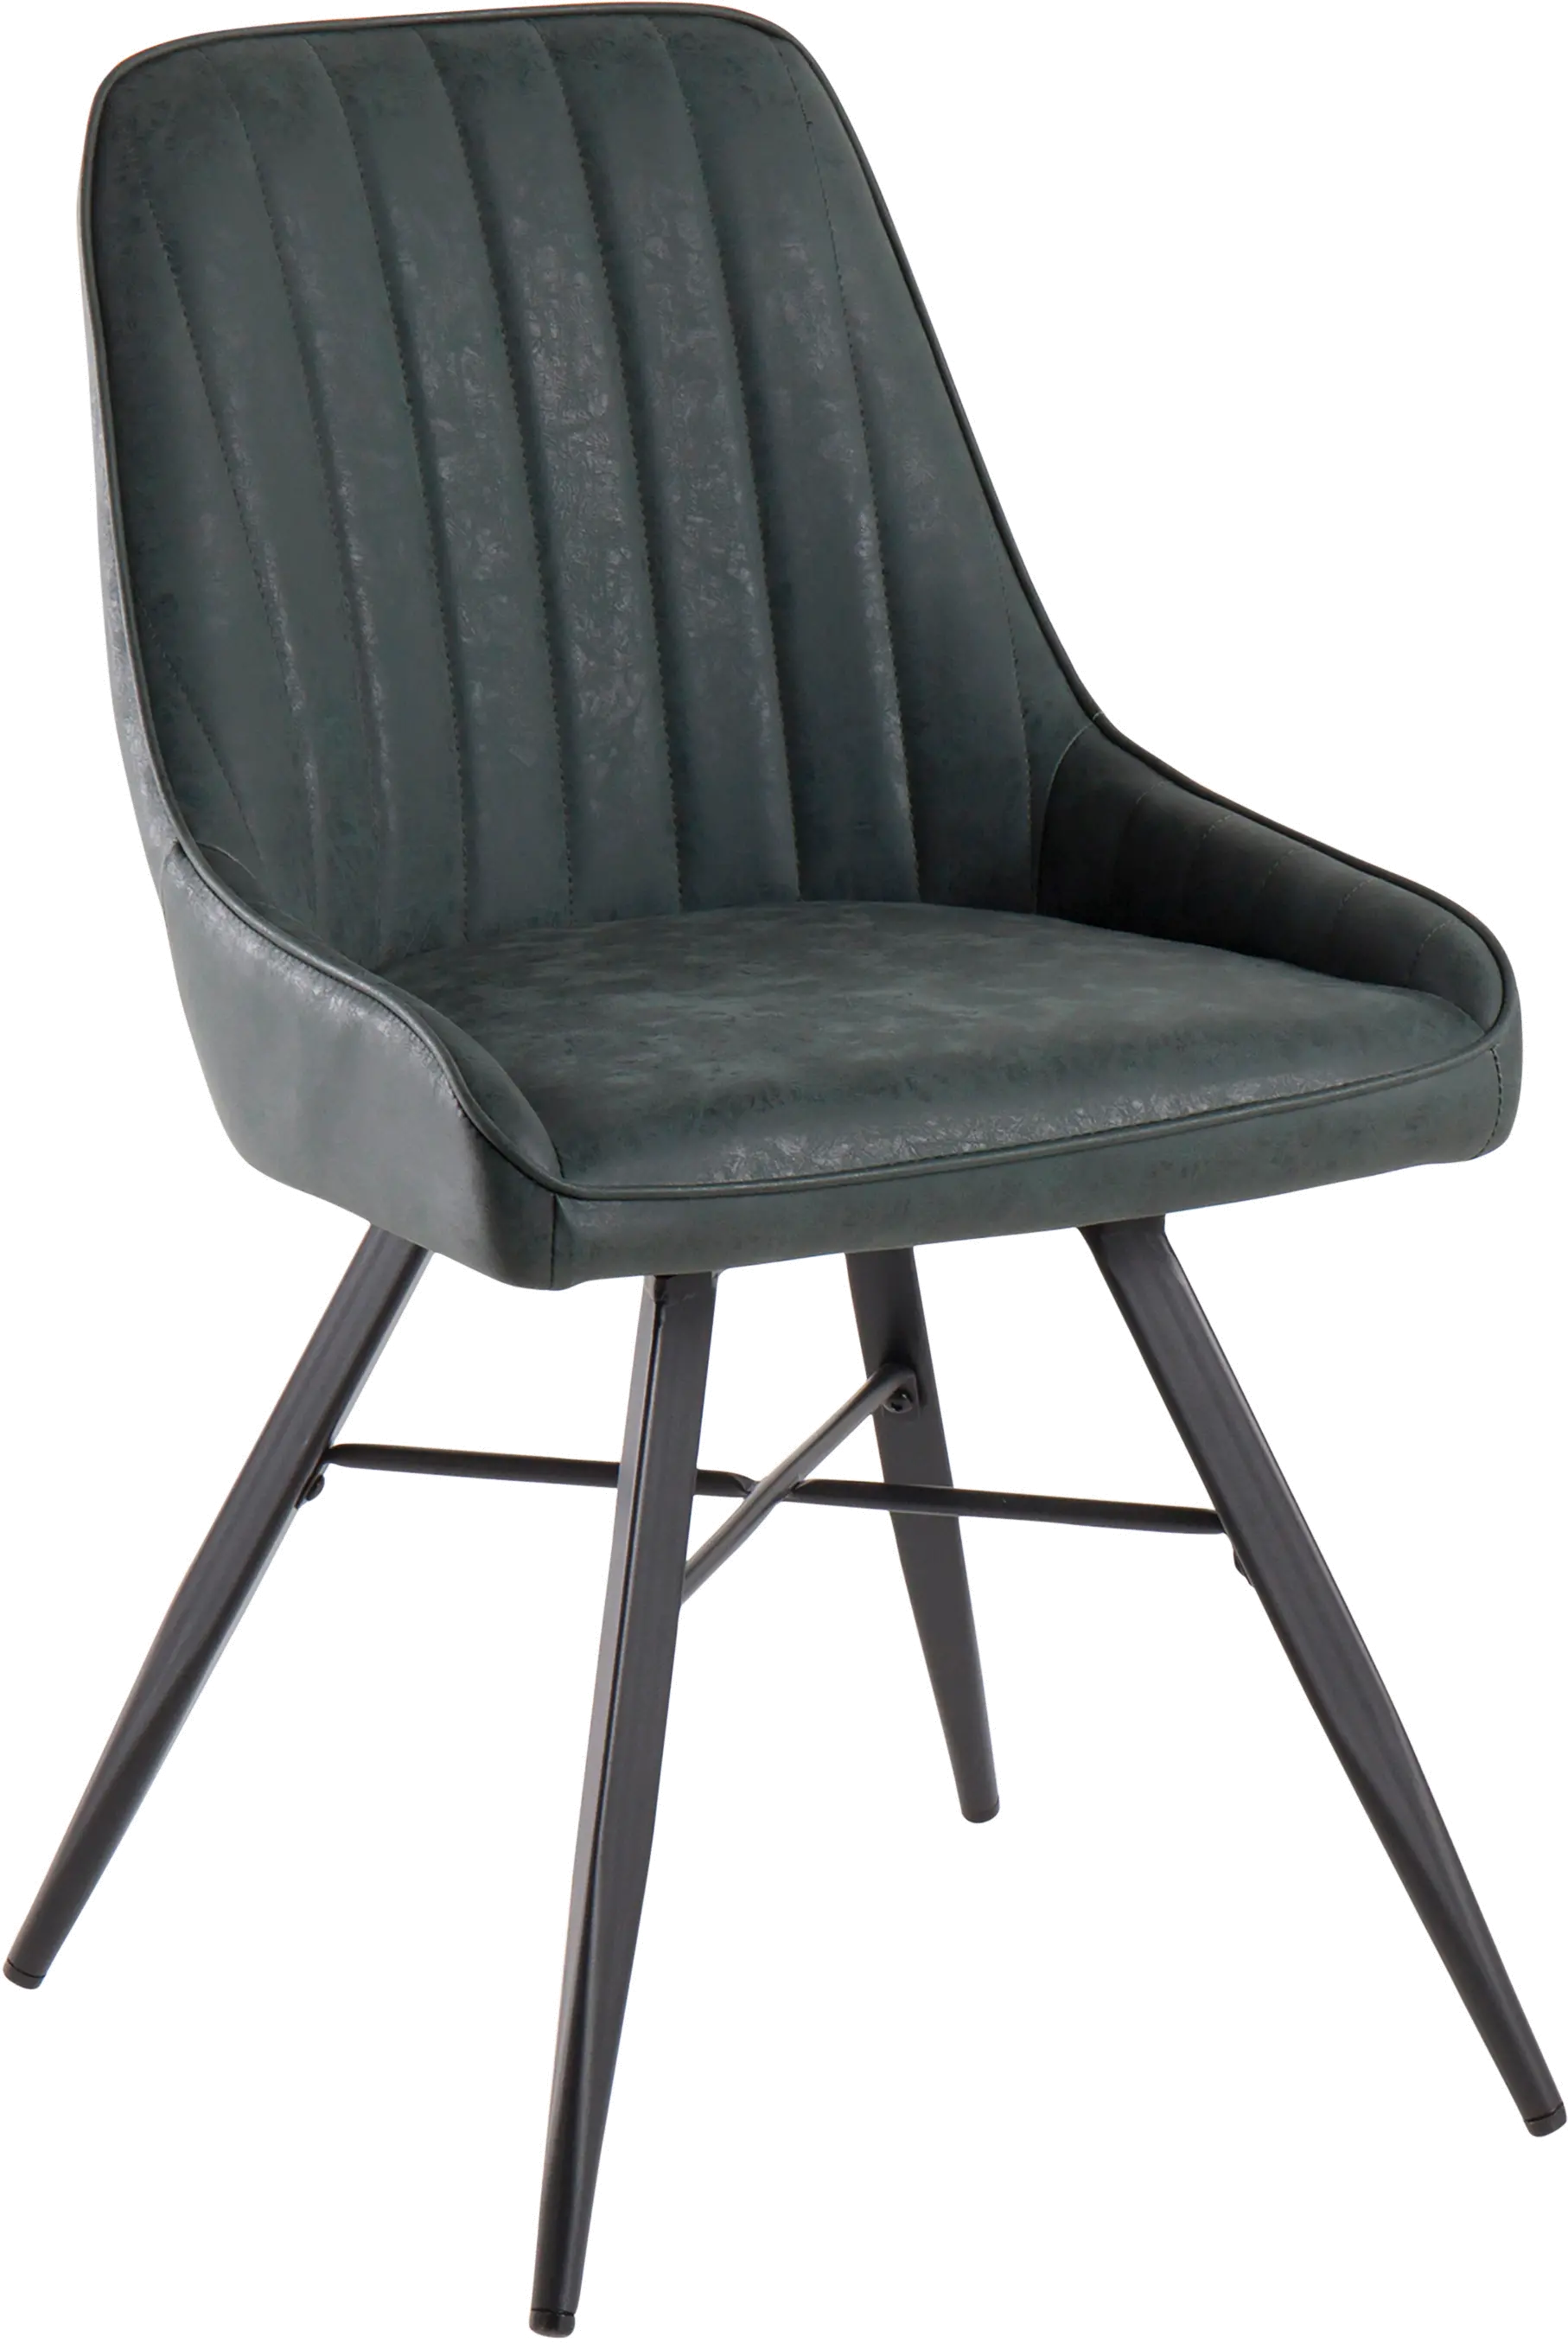 CH-CAVLERBKGN Cavalier Gray Green Faux Leather Swiveling Chair sku CH-CAVLERBKGN